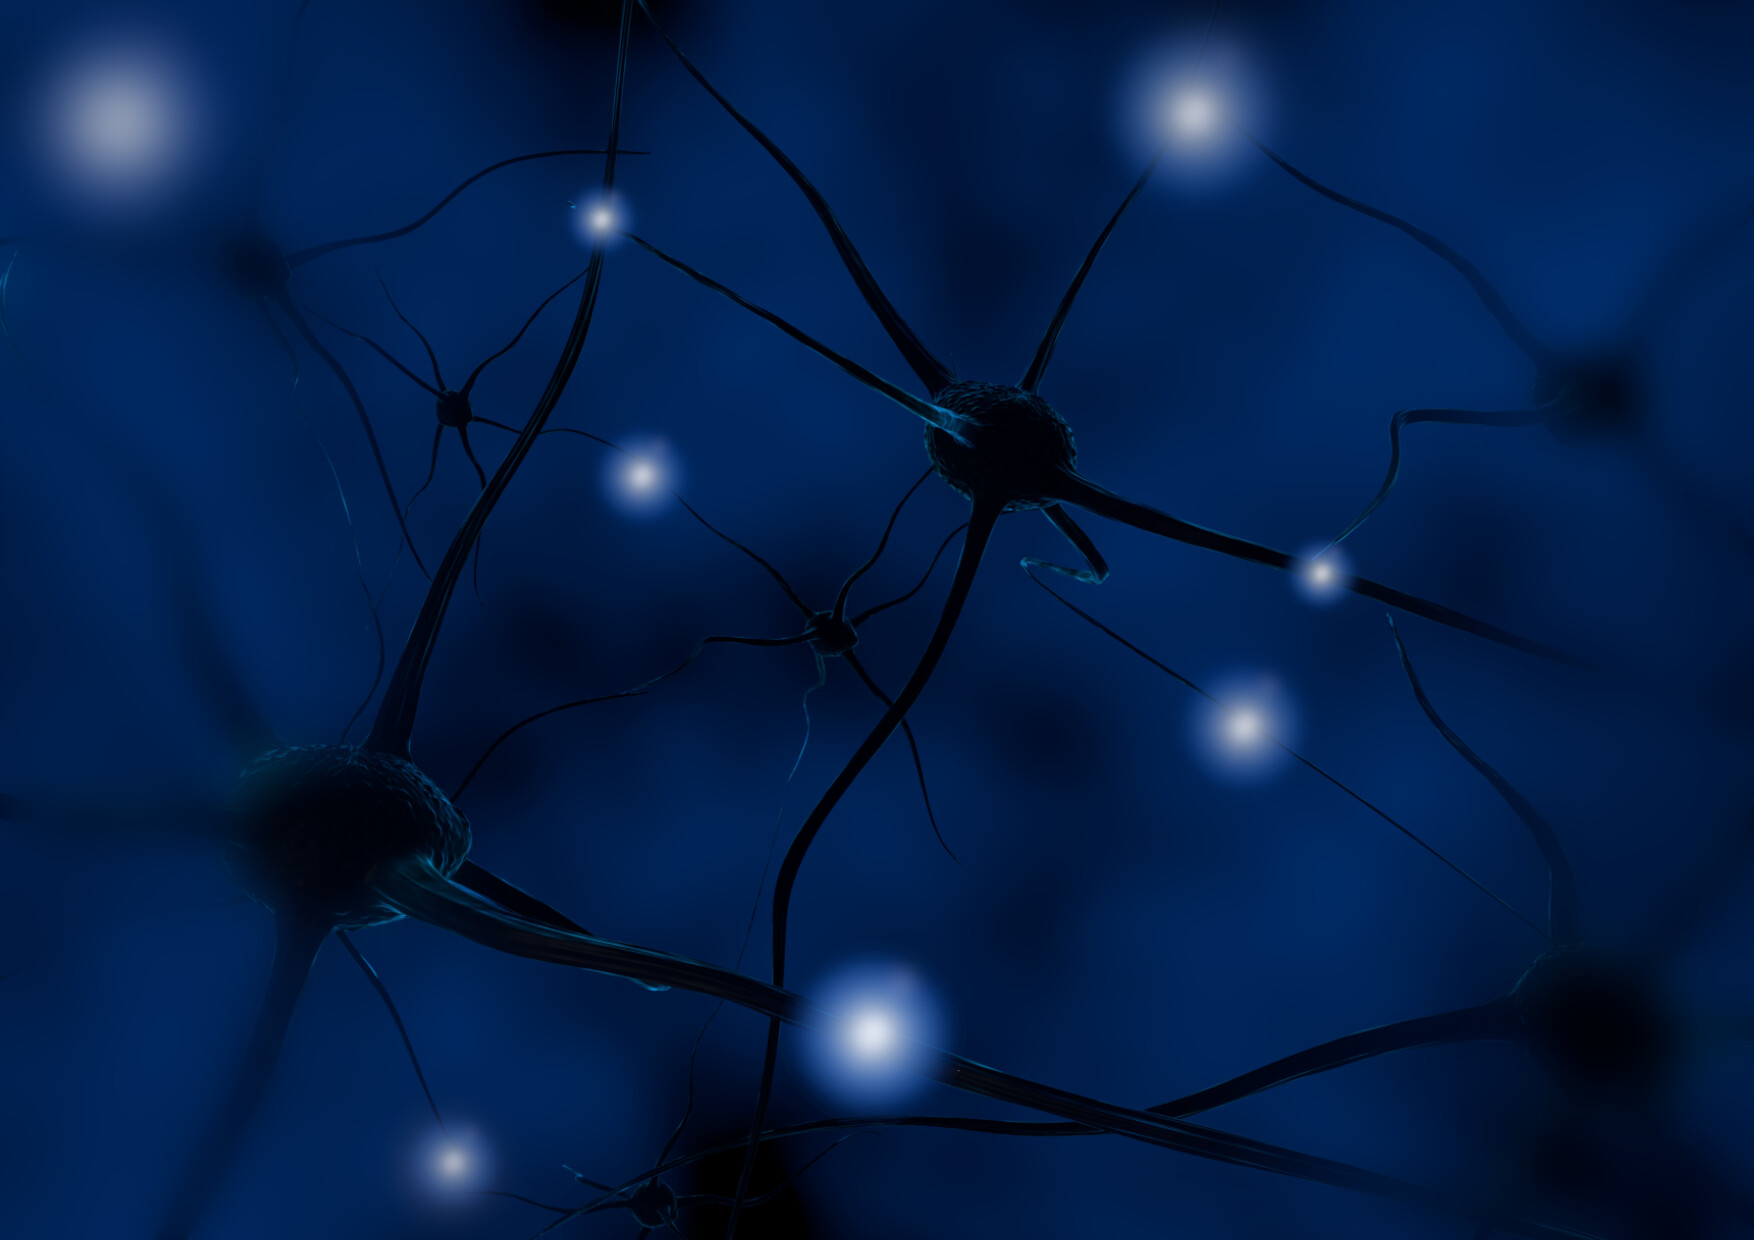 ArtStation - NEURONS CELLS